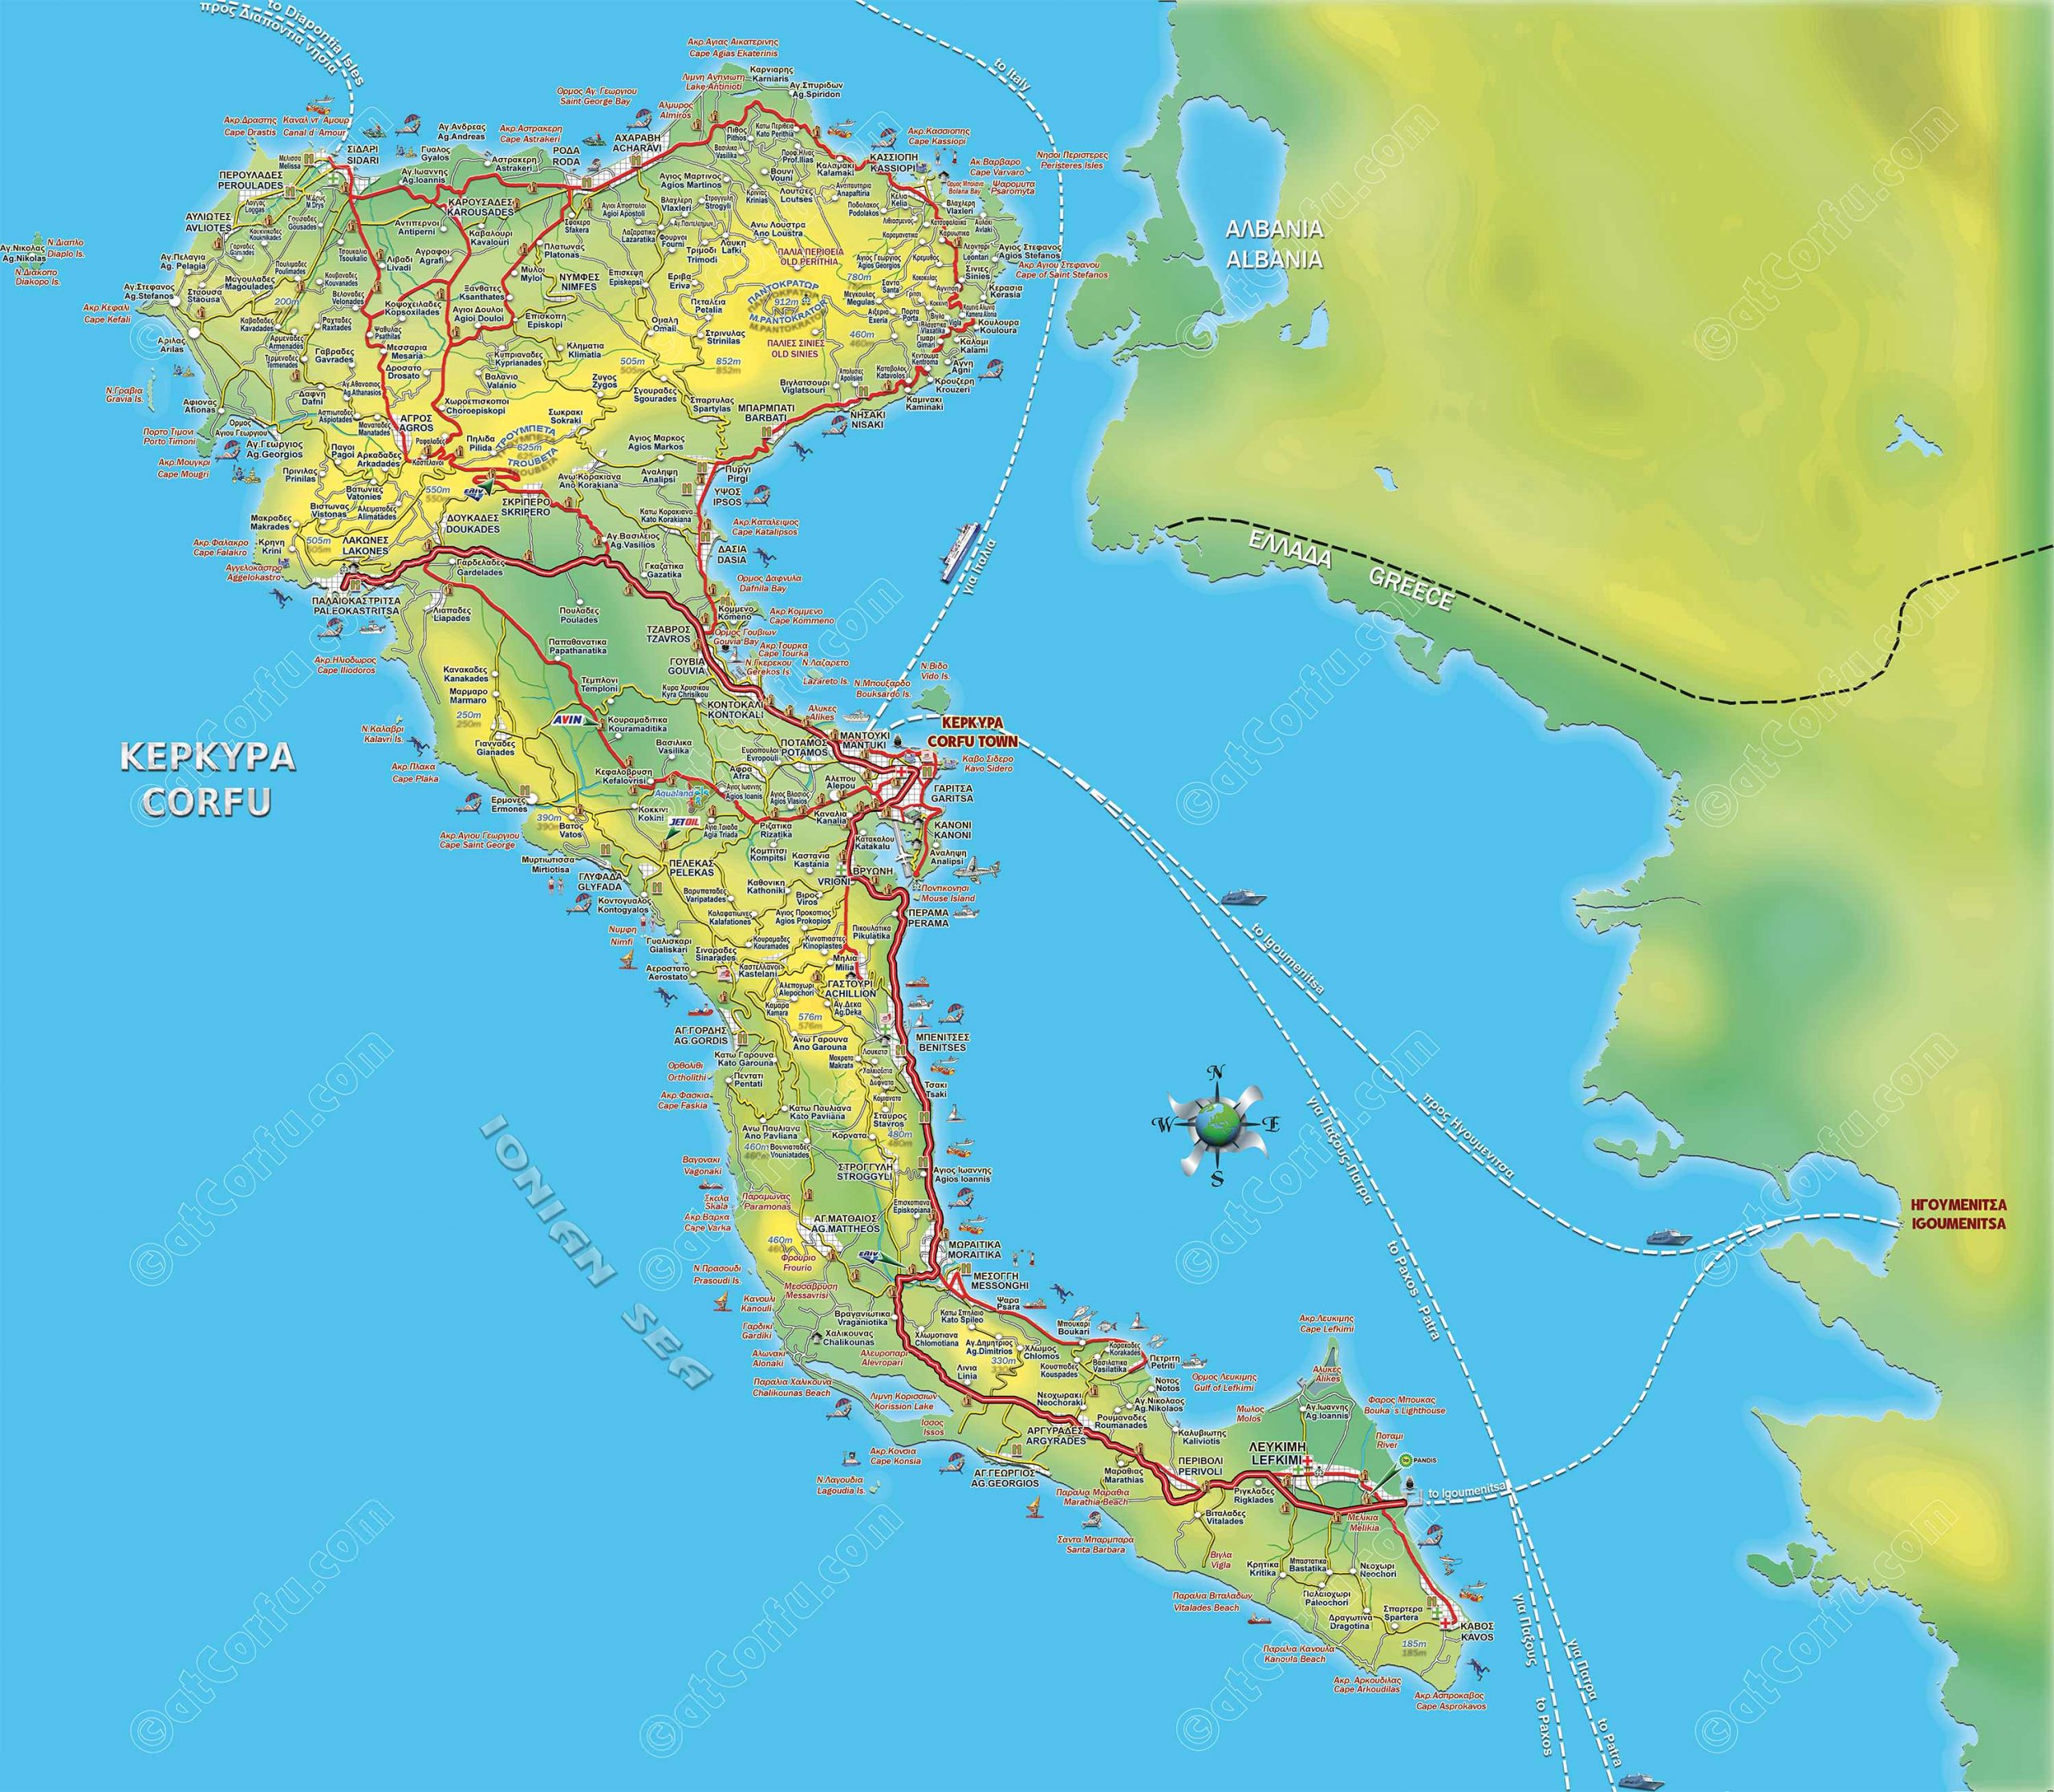 corfu-map – ΤΟ ΙΣΤΟΛΟΓΙΟ ΤΟΥ Δ2